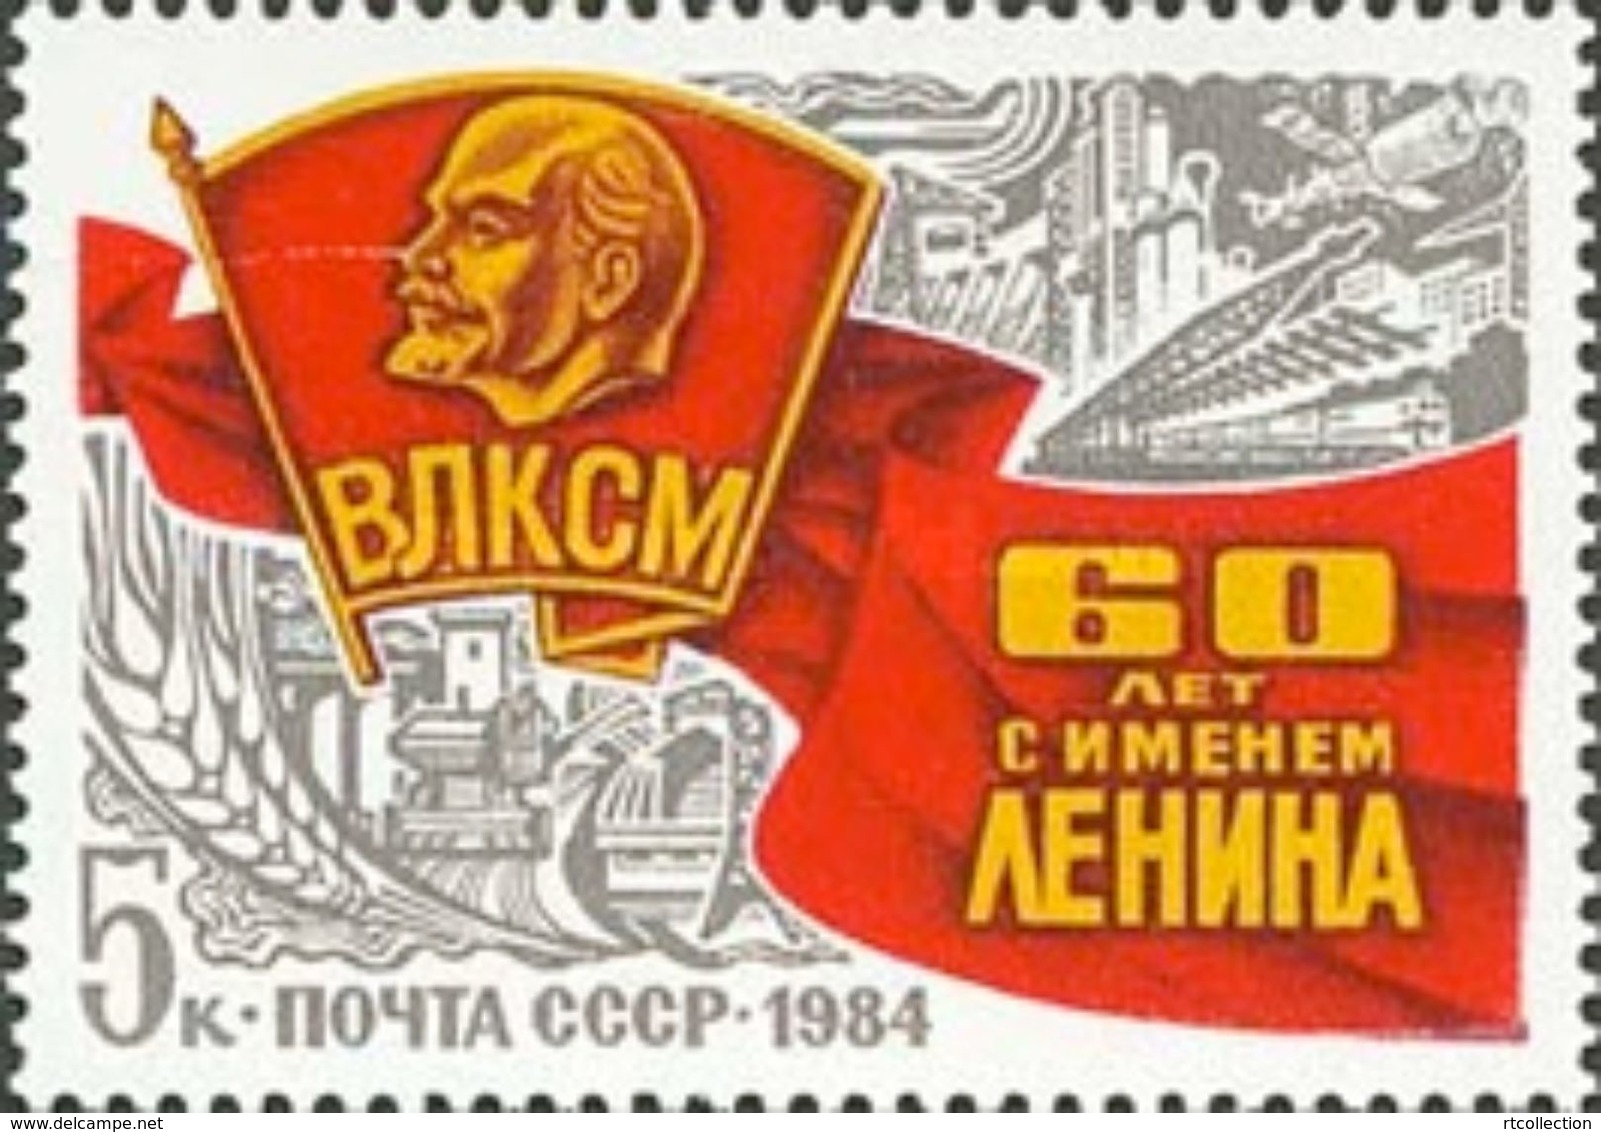 USSR Russia 1984 60th Anniv Naming Komsomol After Lenin Famous People Politician Celebrations Flag Stamp MNH Sc#5272 - Stamps